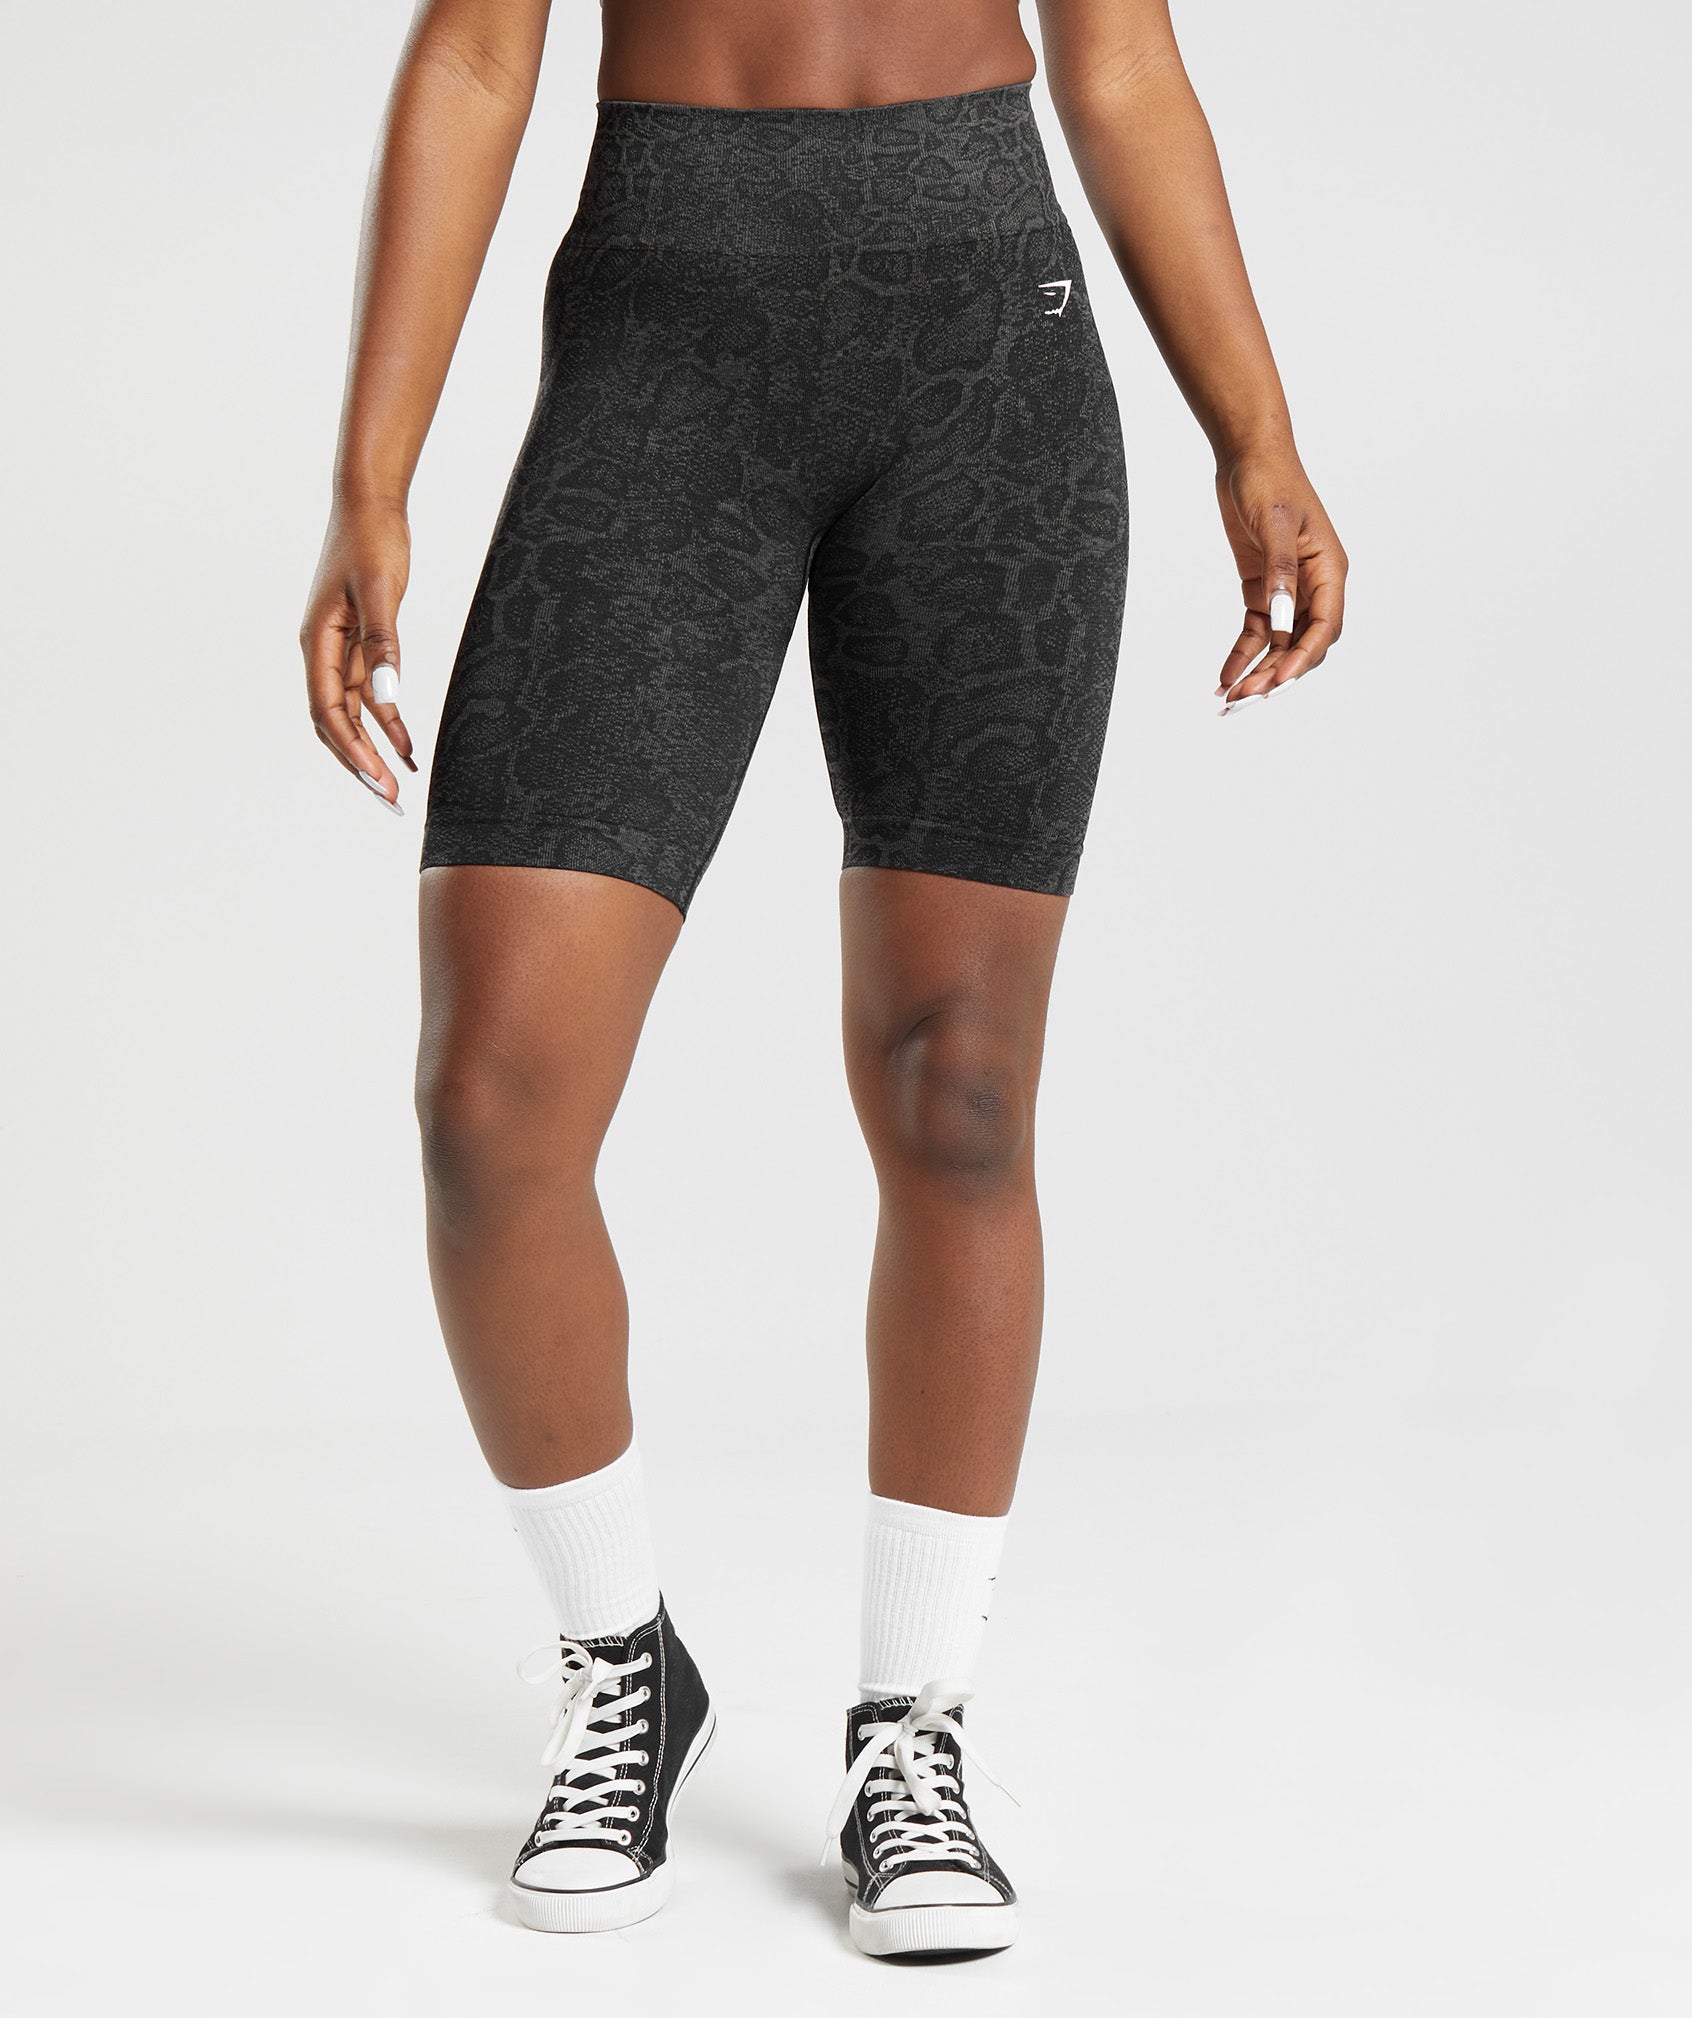 Women's Black Bike Shorts Seamless